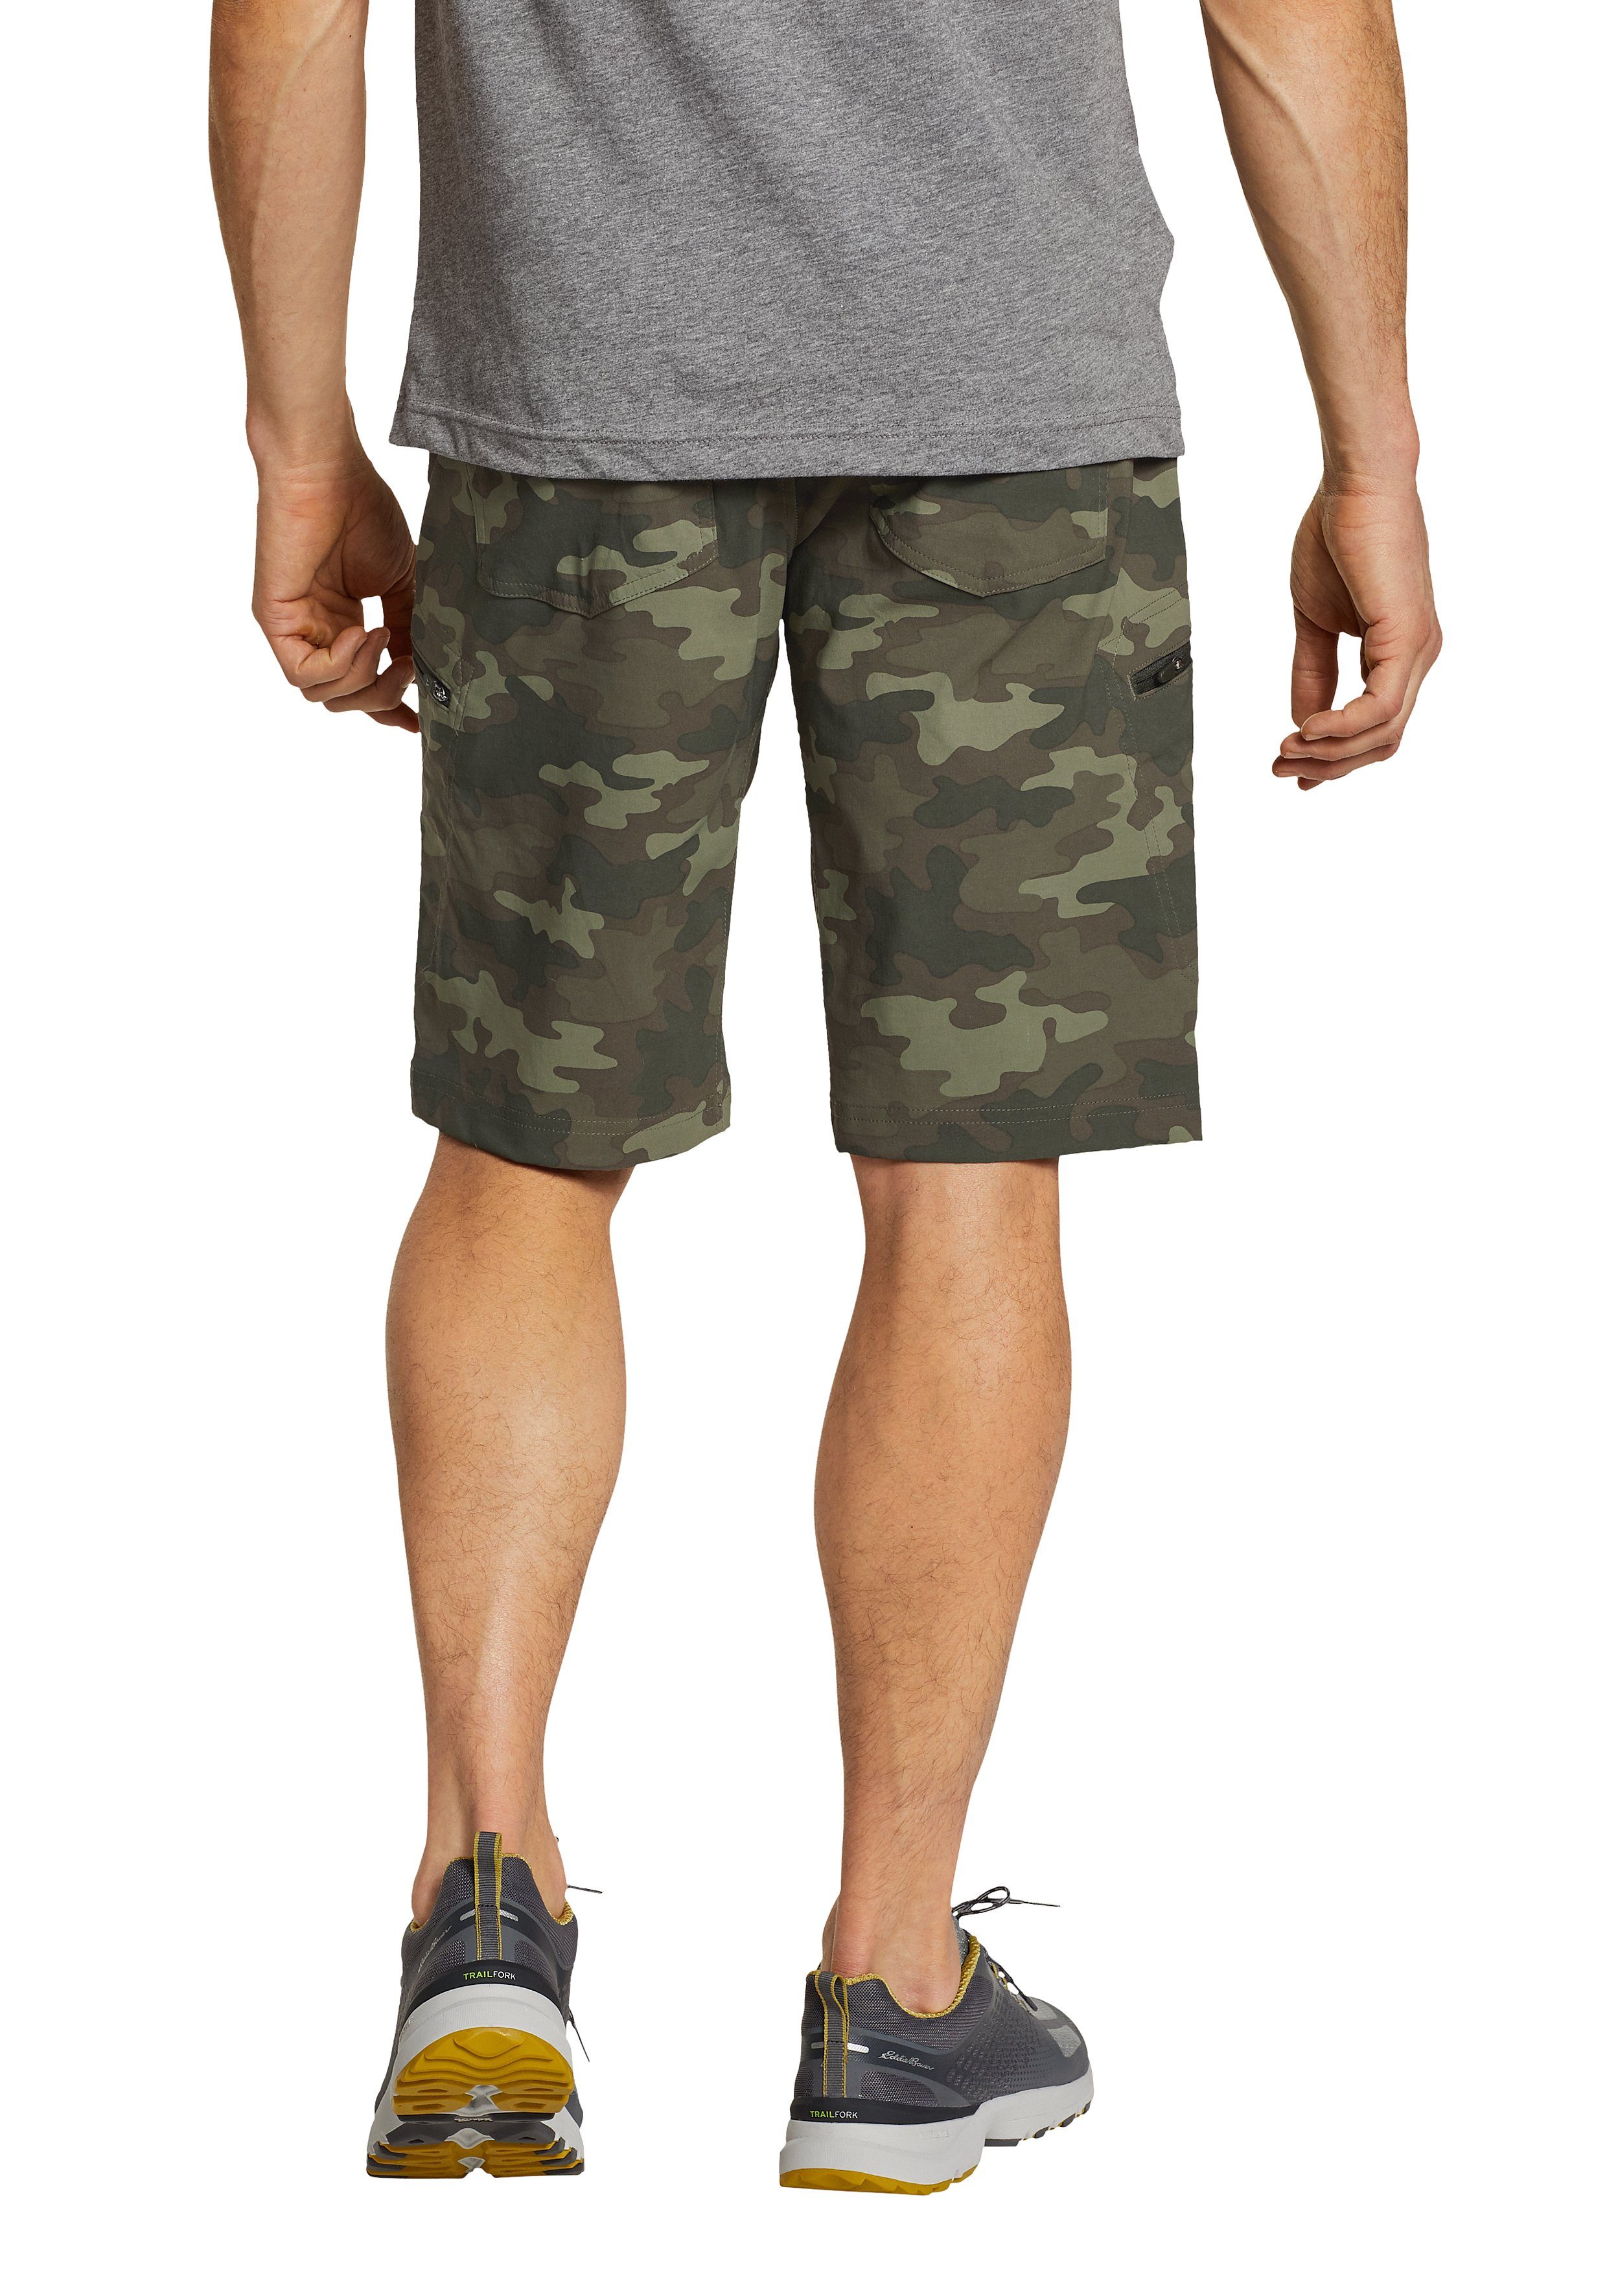 Pro Eddie Bauer Shorts Guide Shorts - gemustert Camouflage